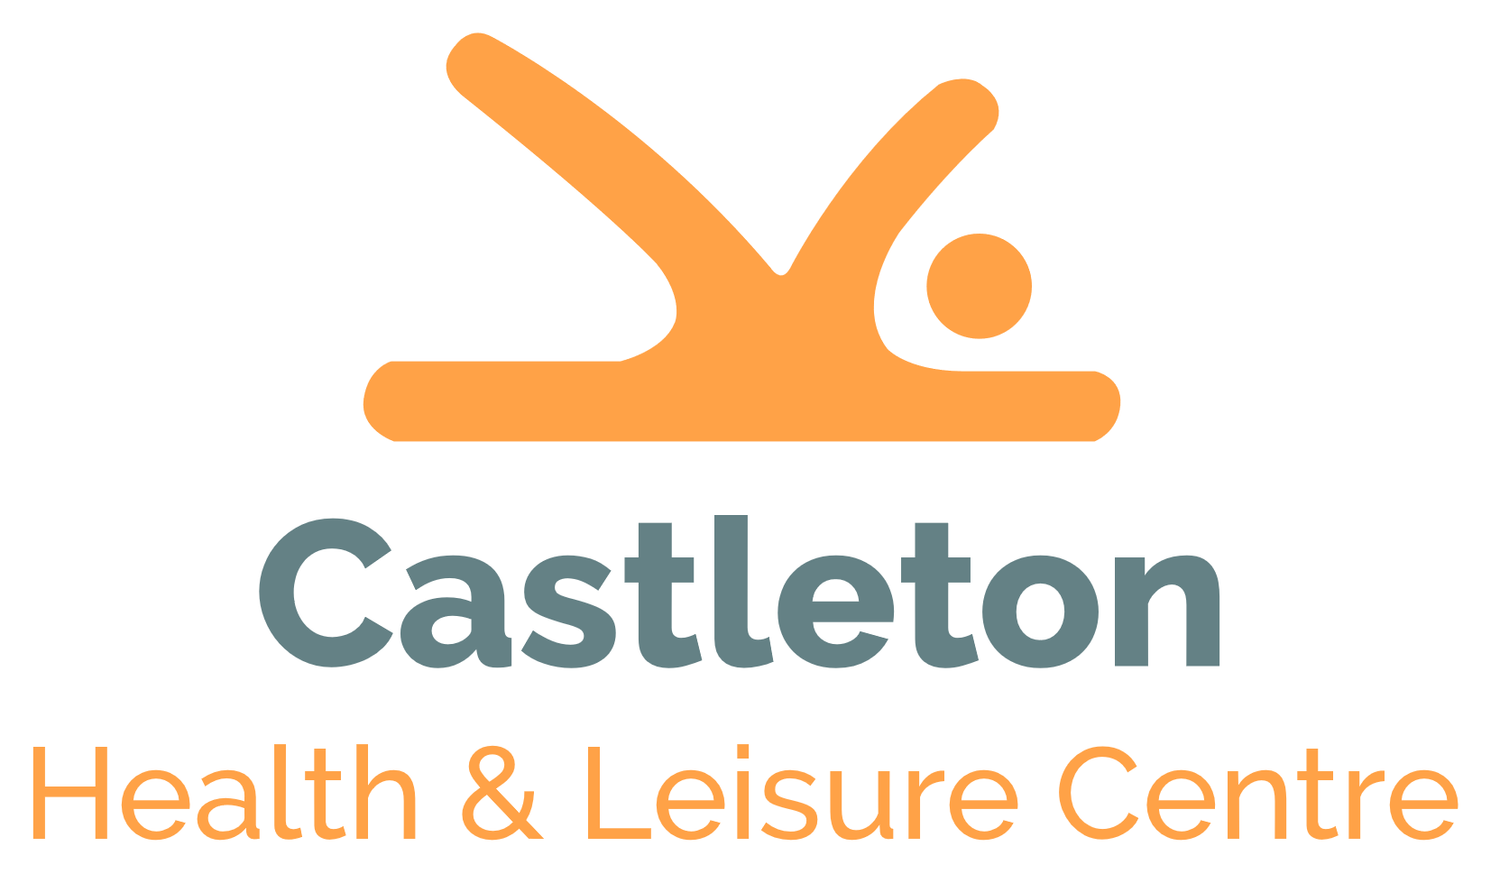 Castleton Health and Leisure Centre